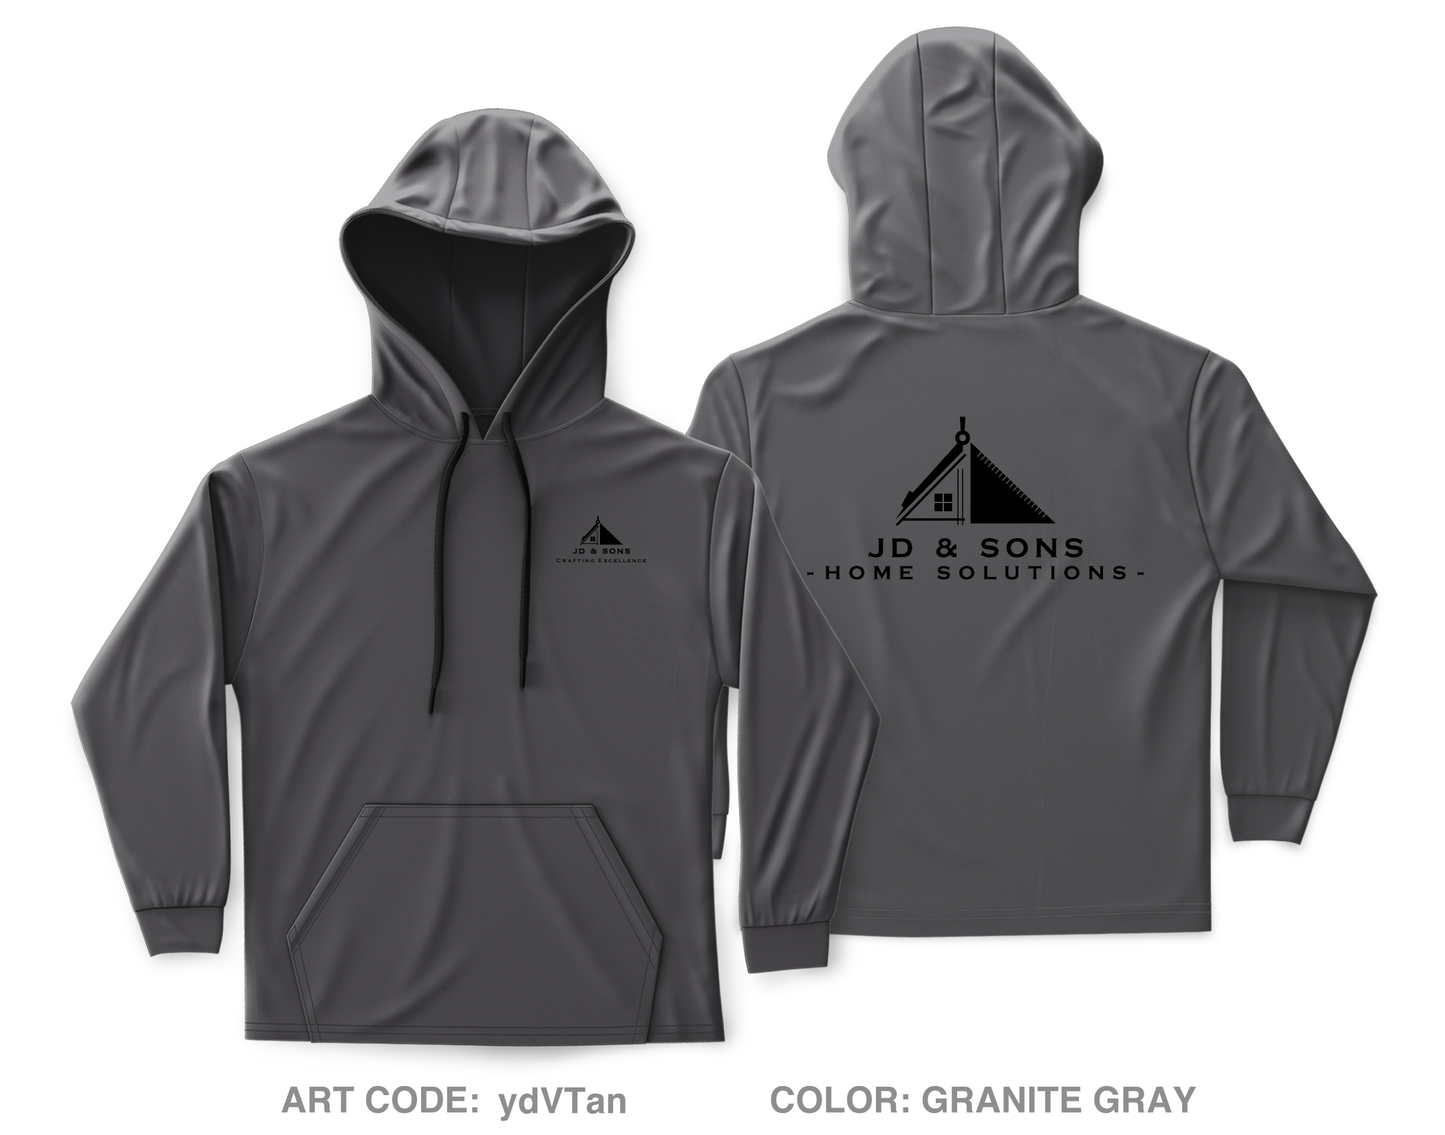 JD & Sons Home Solutions Core Men's Hooded Performance Sweatshirt - ydVTan